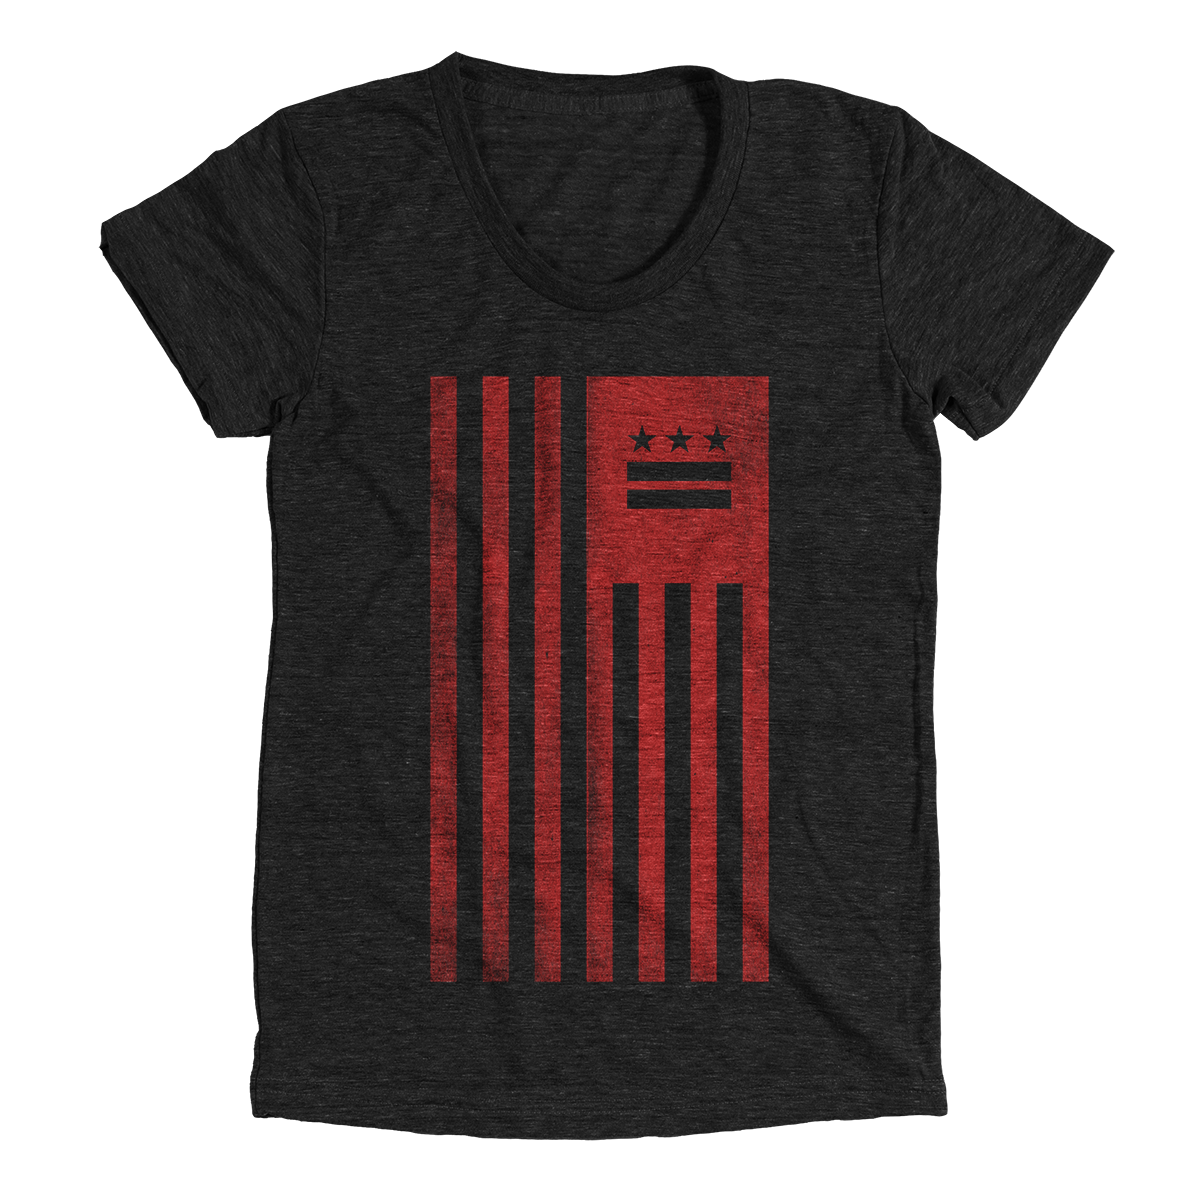 America's City Shirt